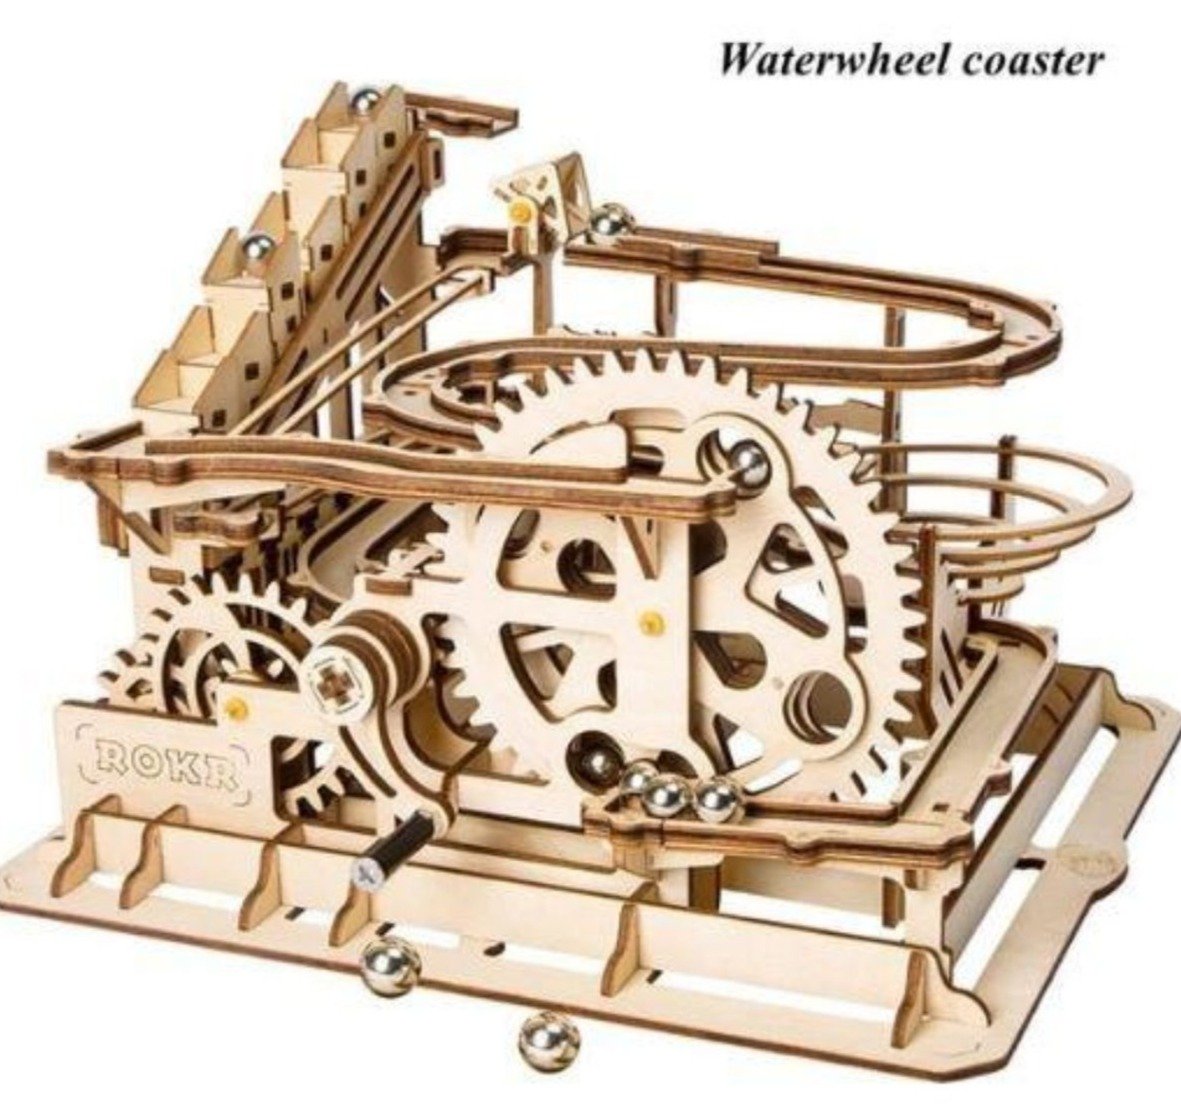 DIY Mechanical Wooden Gear Pendulum Clock Building Kit - Fuego Cloud